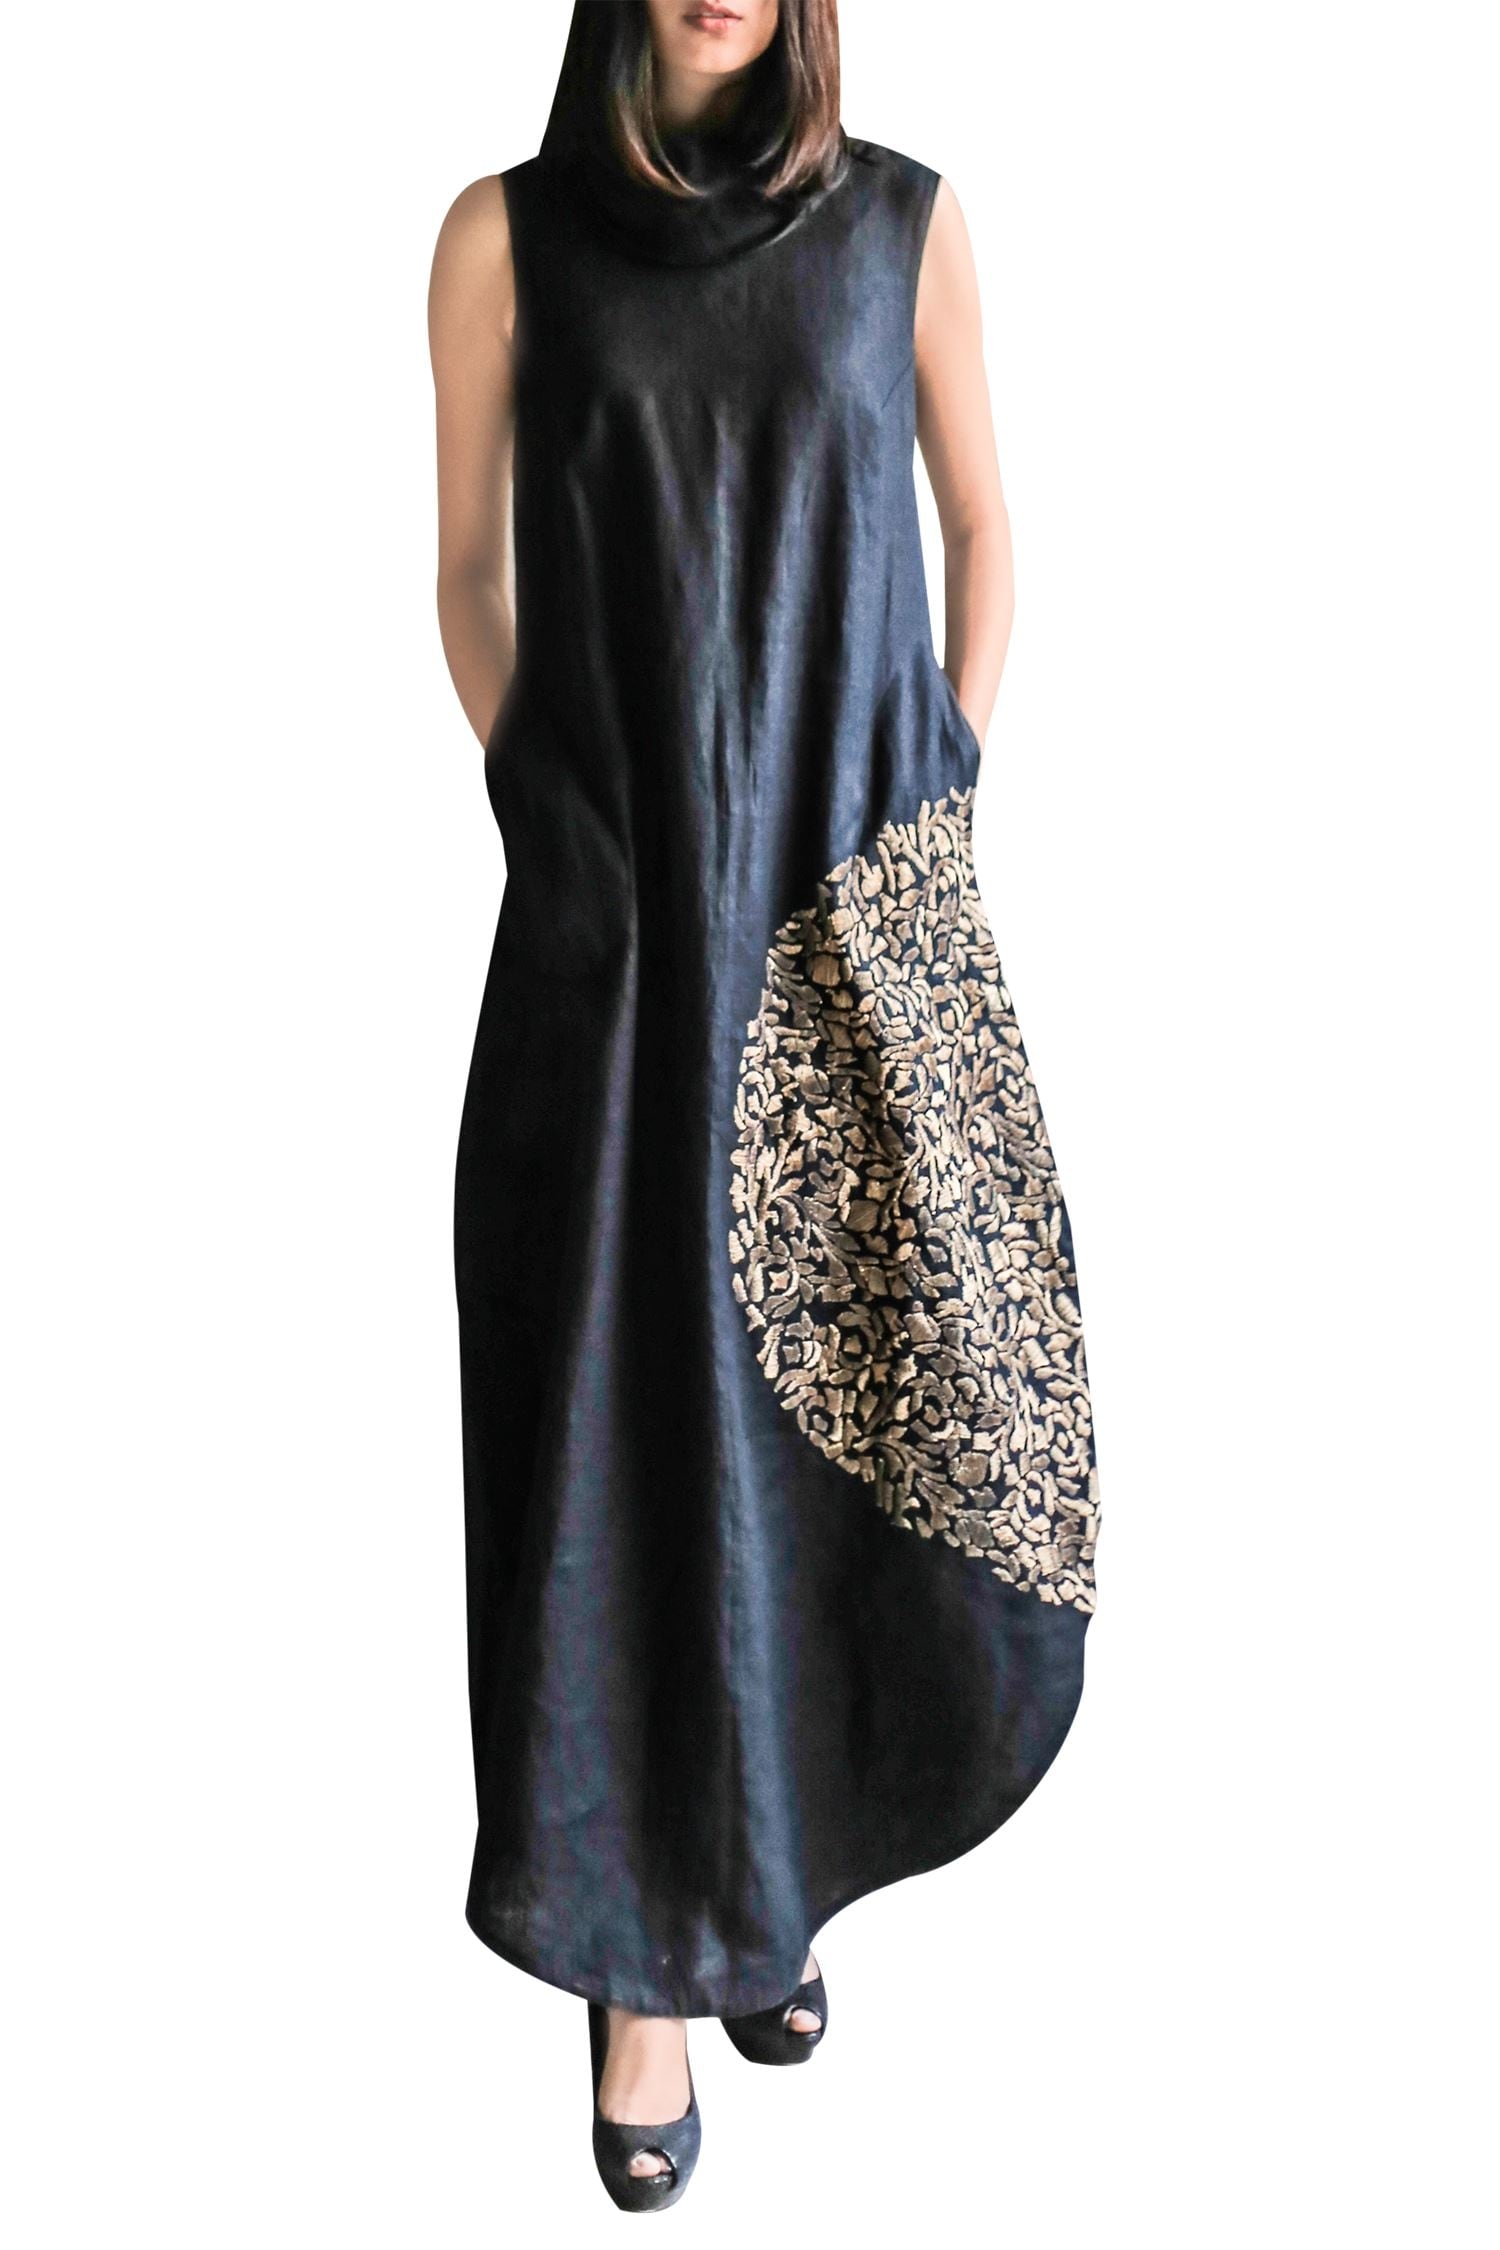 Taika by Poonam Bhagat Black Linen Dress